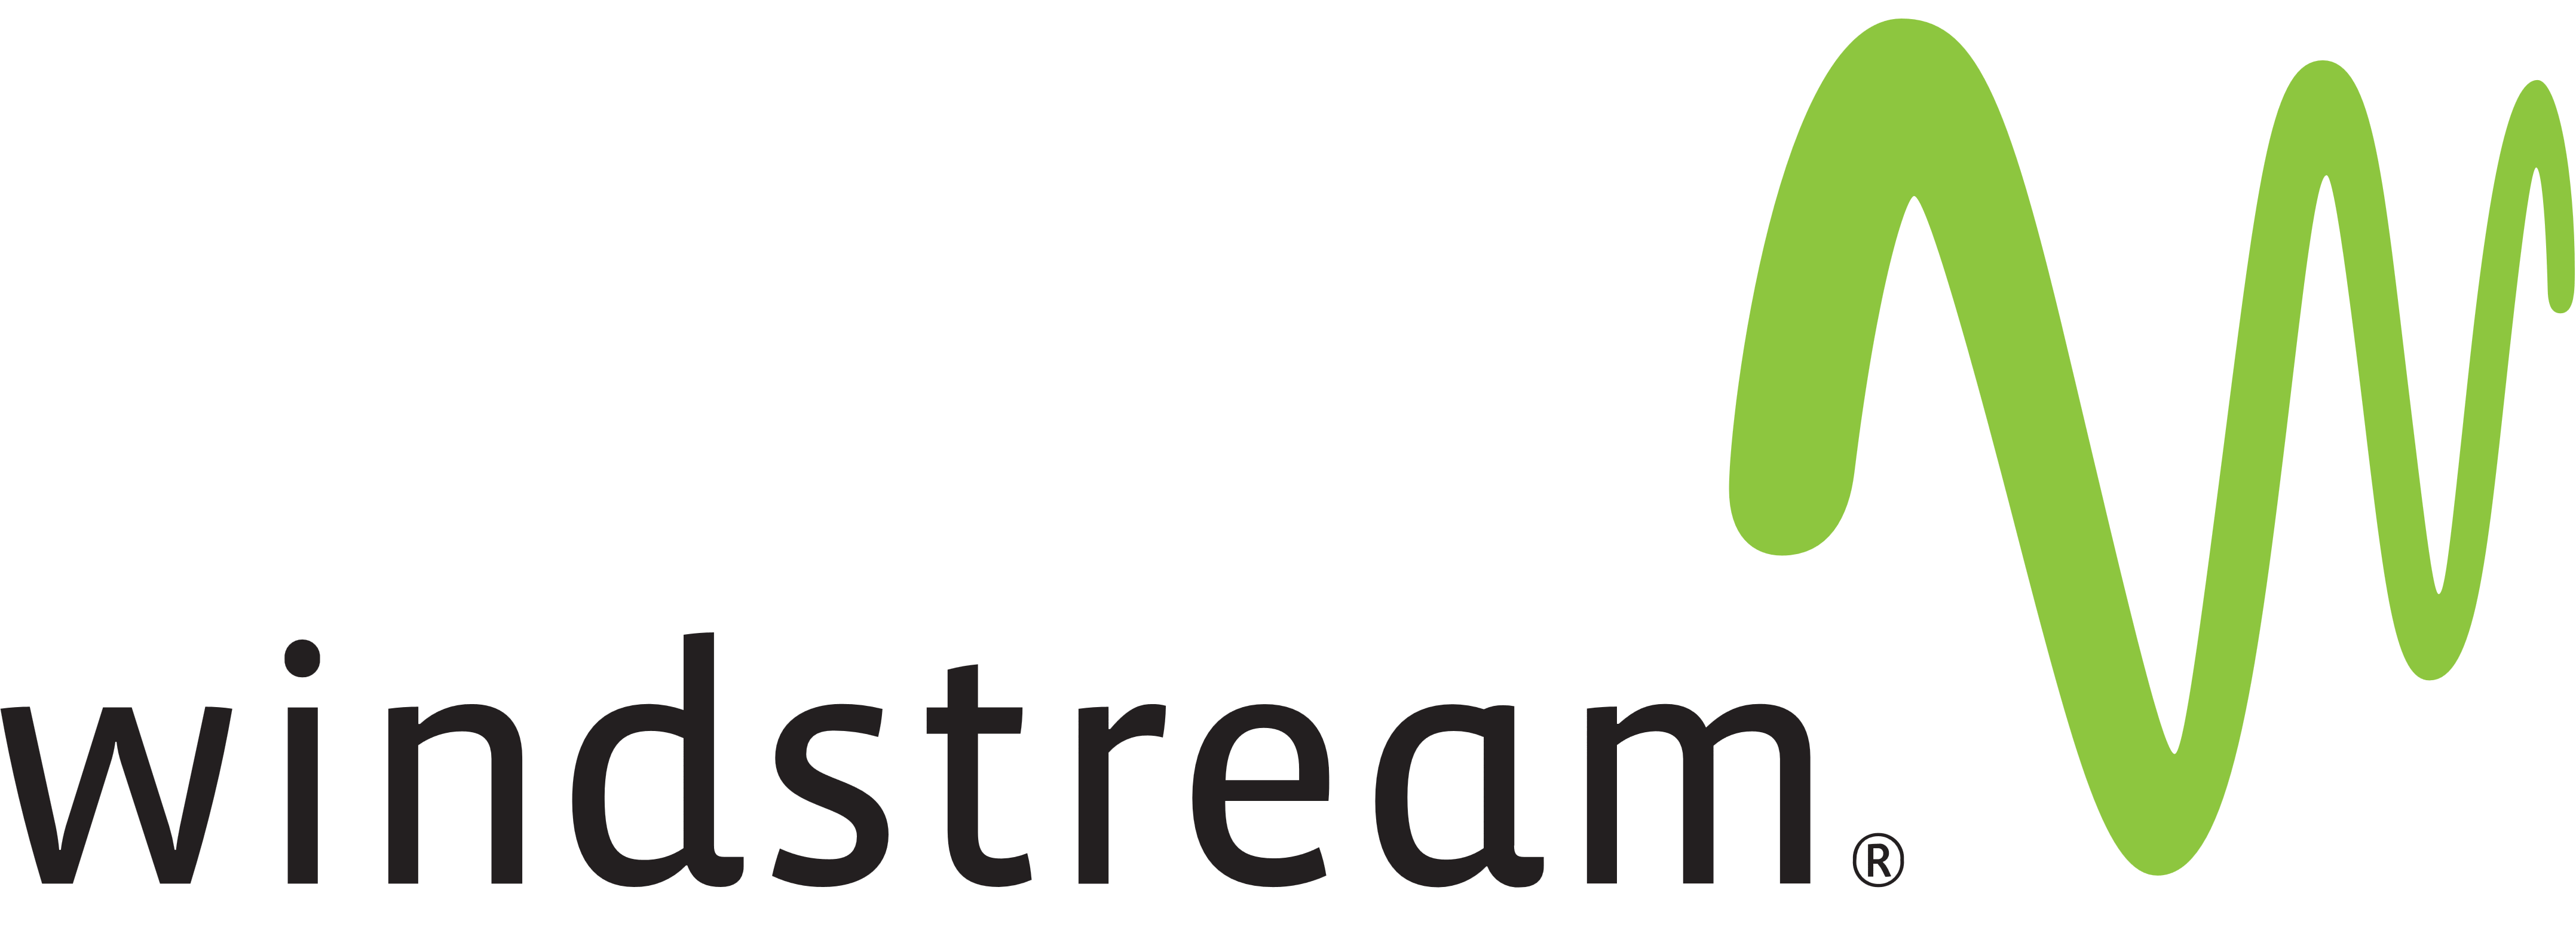 Windstream Logo - Windstream – Logos, brands and logotypes